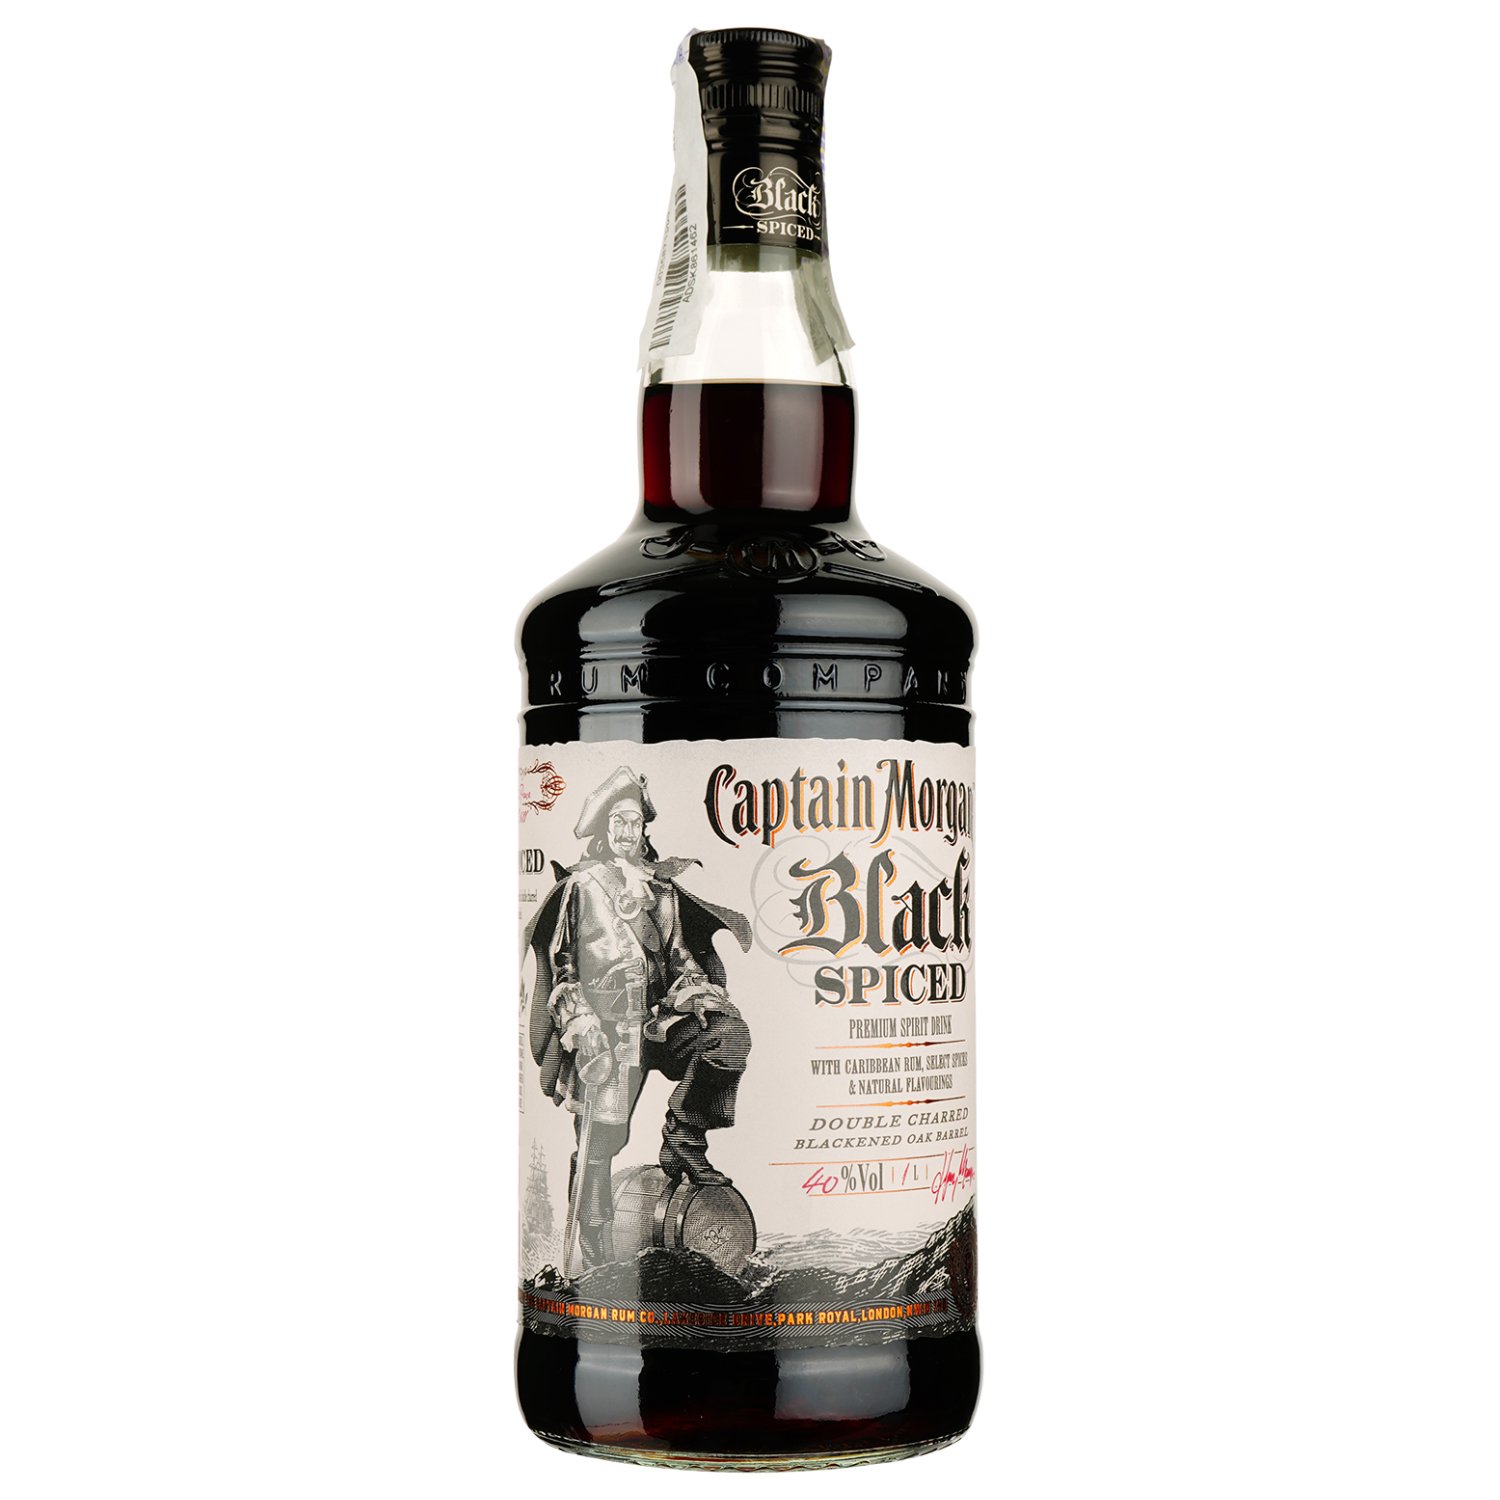 Ромовый напиток Captain Morgan Black Spiced, 40%, 1 л + 2 рюмки - фото 4